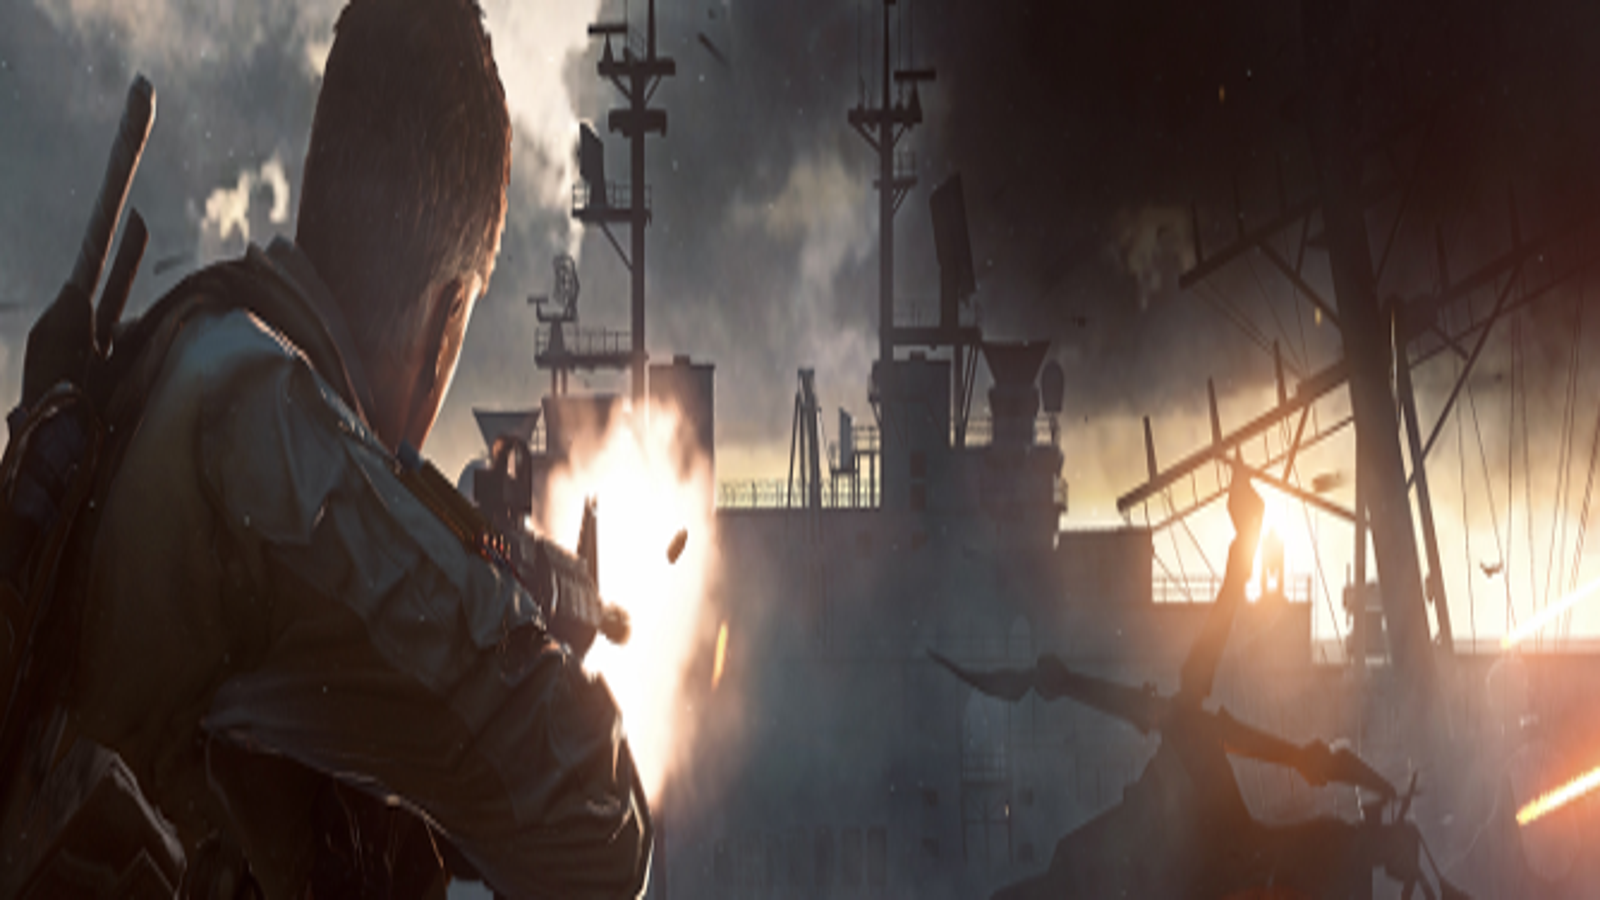 Battlefield 4 Battlelog Gets Major Update with Support for China Rising DLC